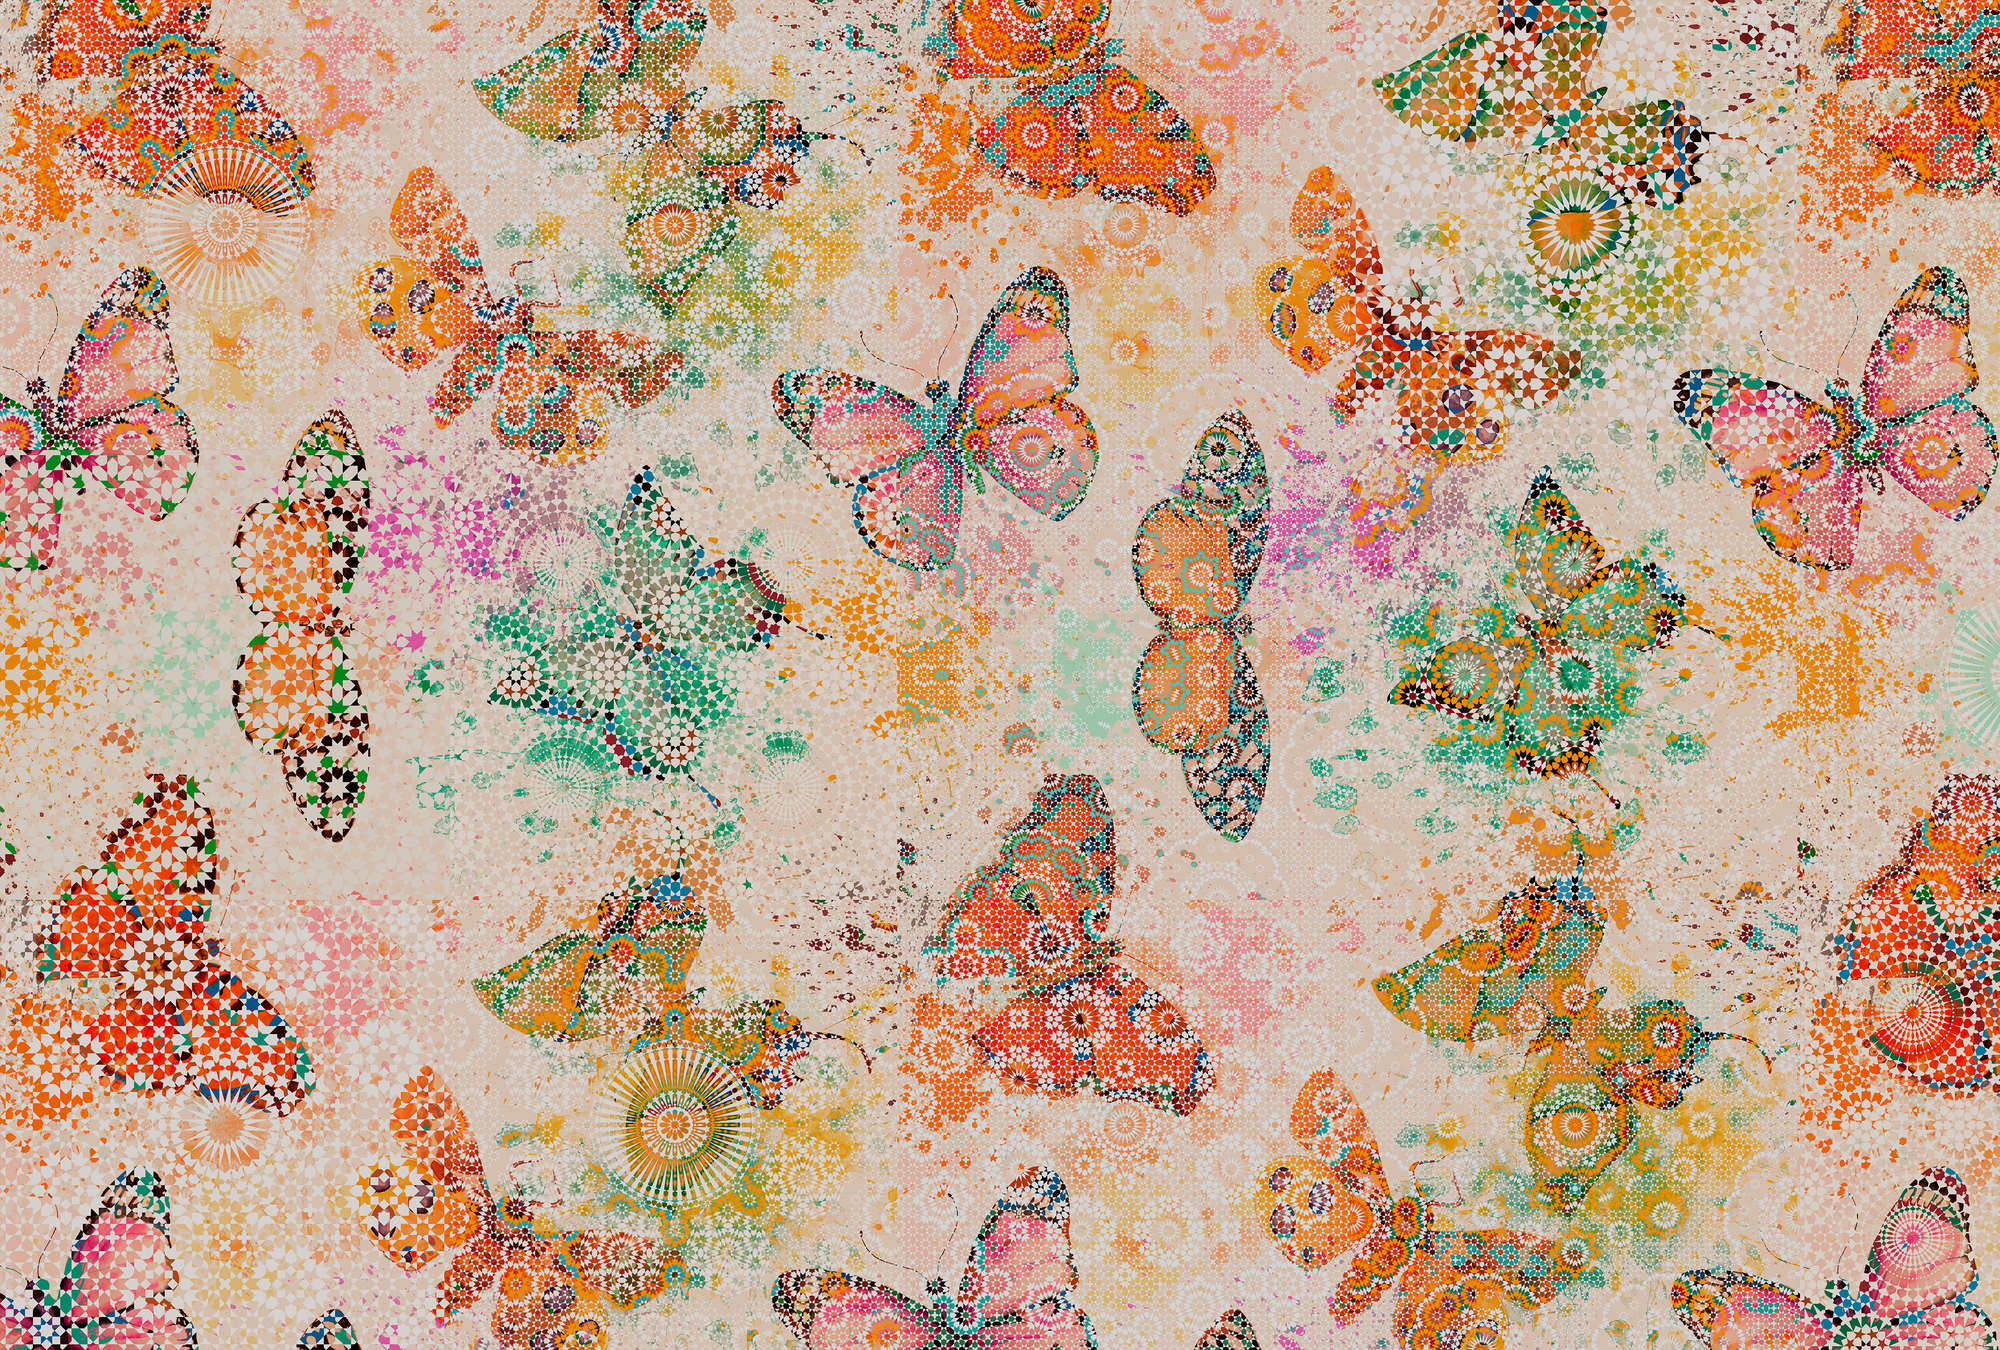             Fotomurali di farfalle a mosaico - Walls by Patel
        